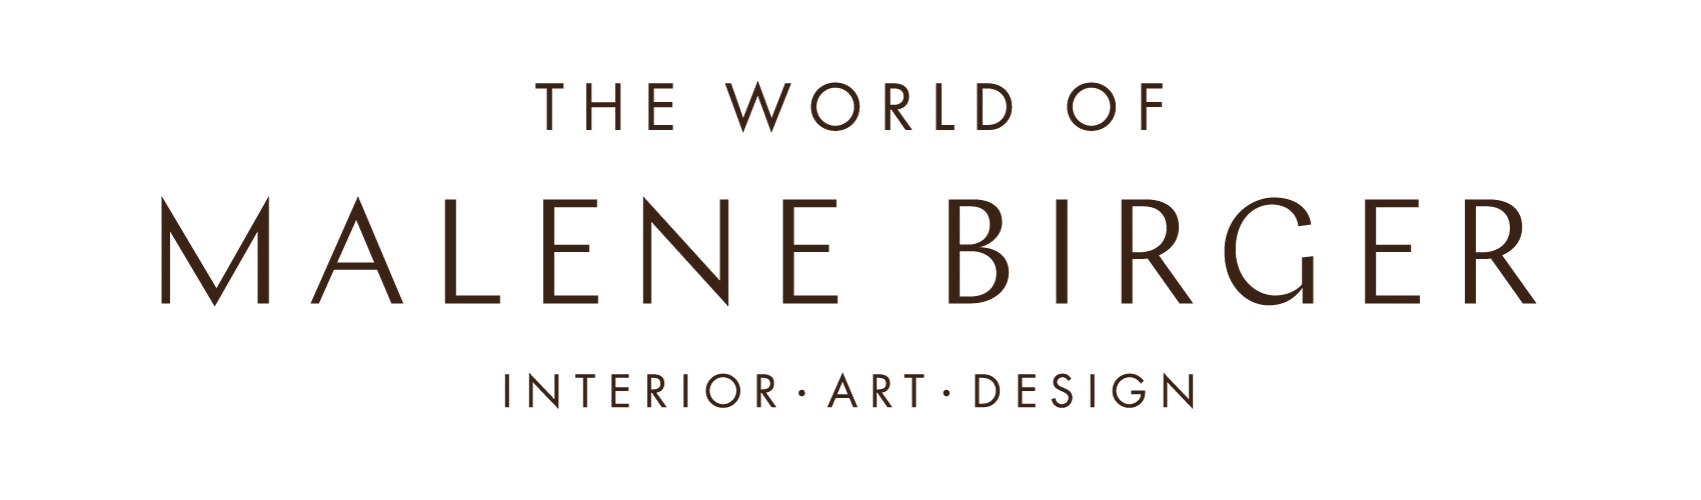 The world of Malene Birger logo